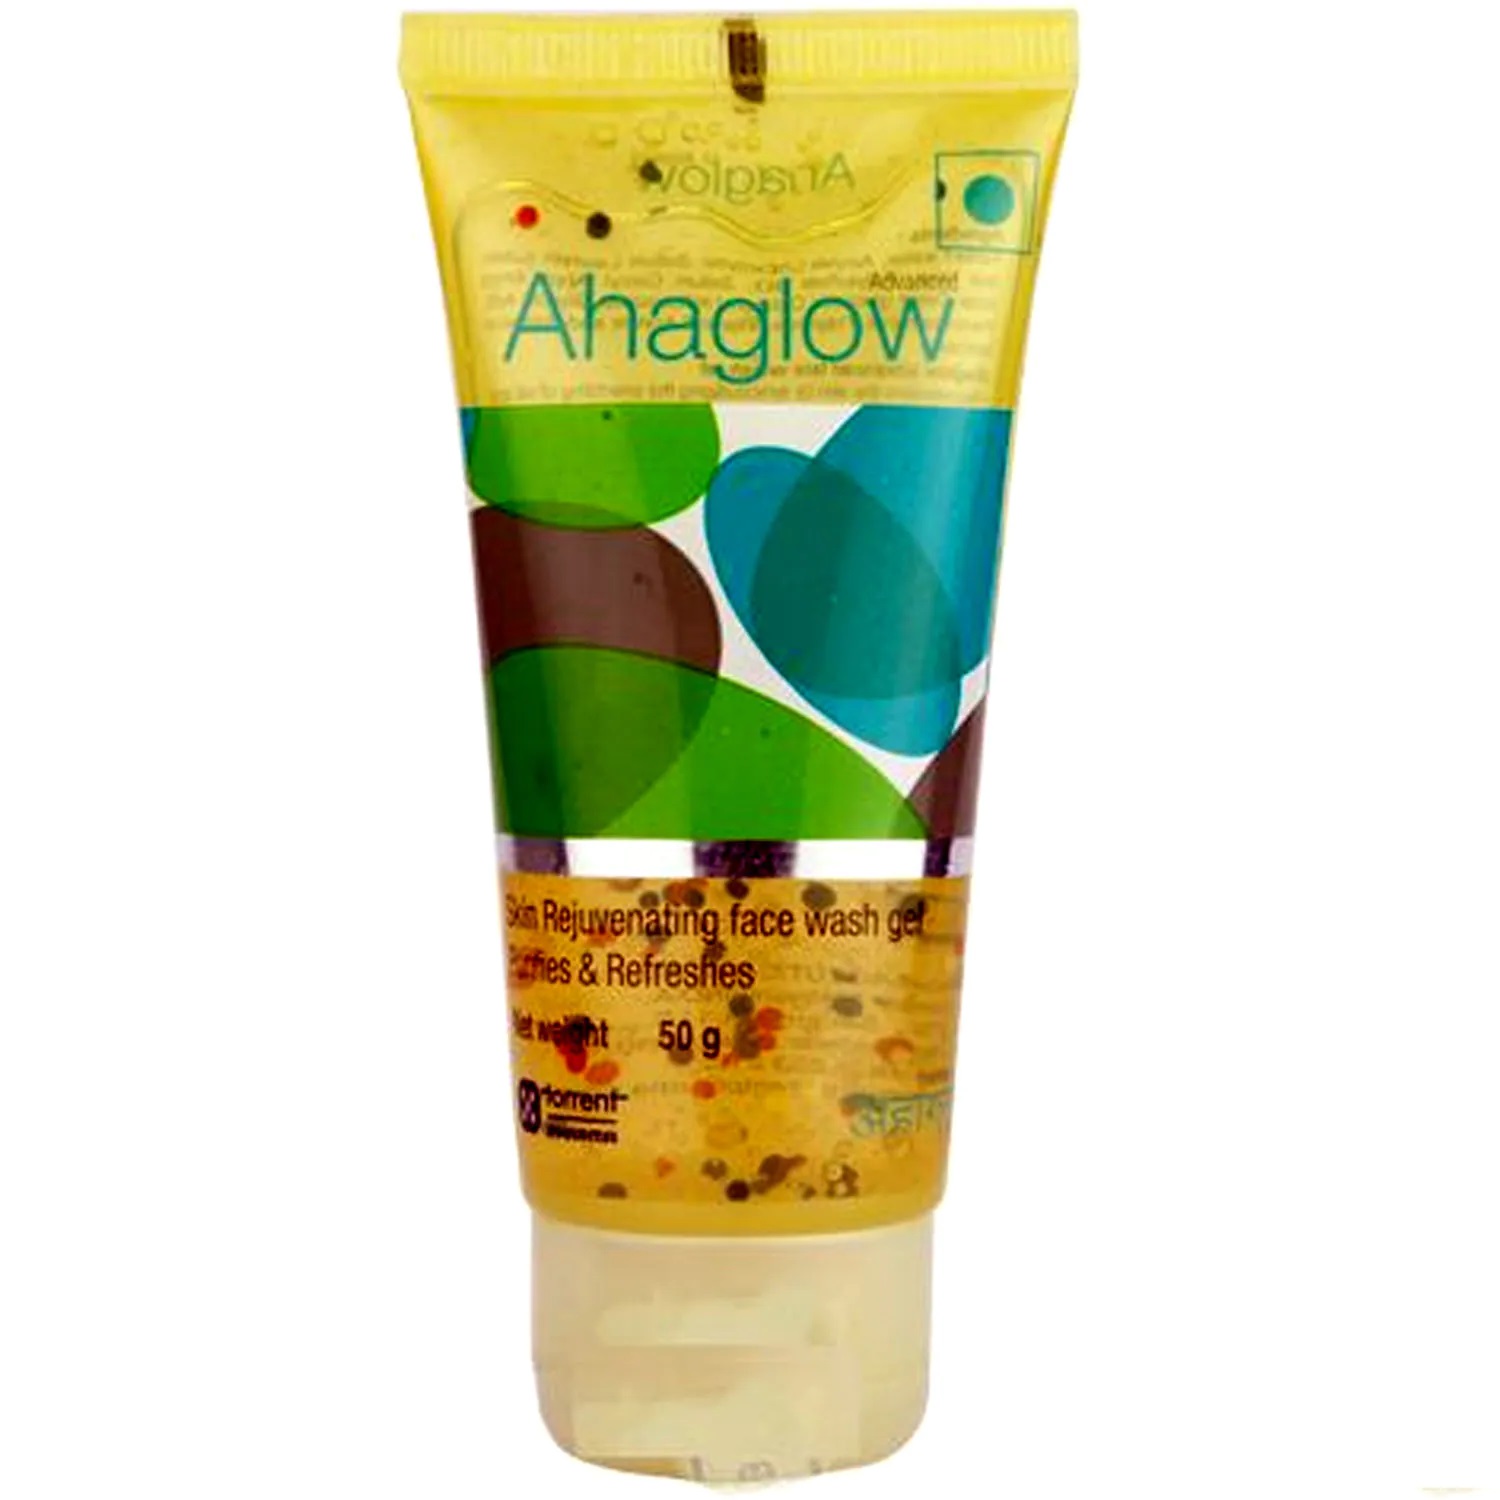 Ahaglow Advanced Skin Rejuvenating Face Wash, 50 gm